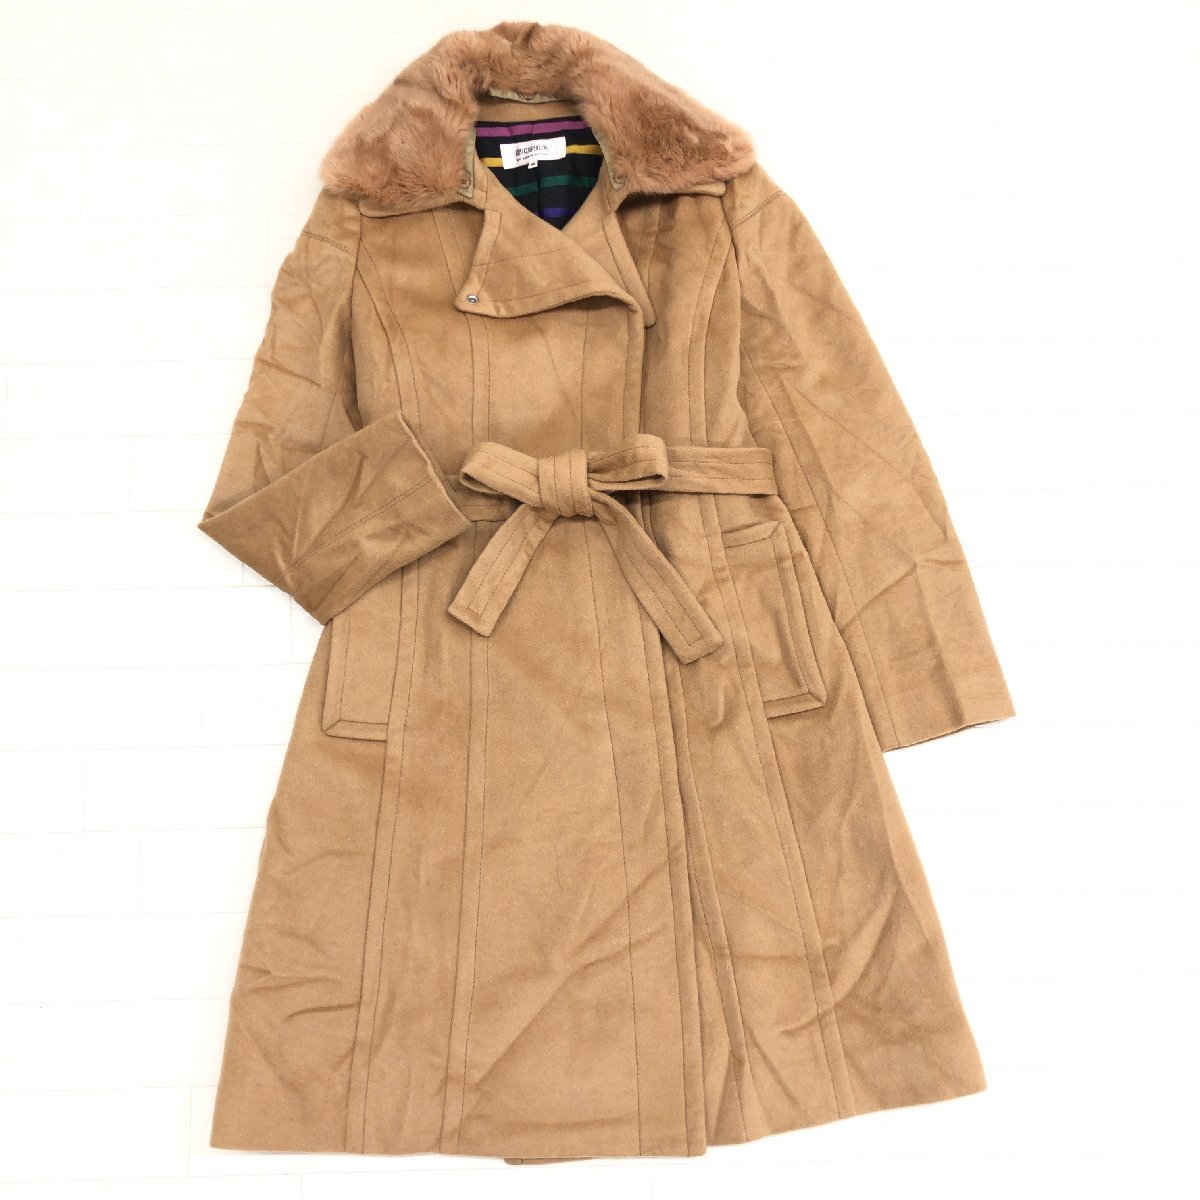 *SONIA RYKIEL Sonia Rykiel Rex мех A линия bell tedo пальто 40(L) Camel длинное пальто шерстяное пальто внутренний стандартный товар женский 